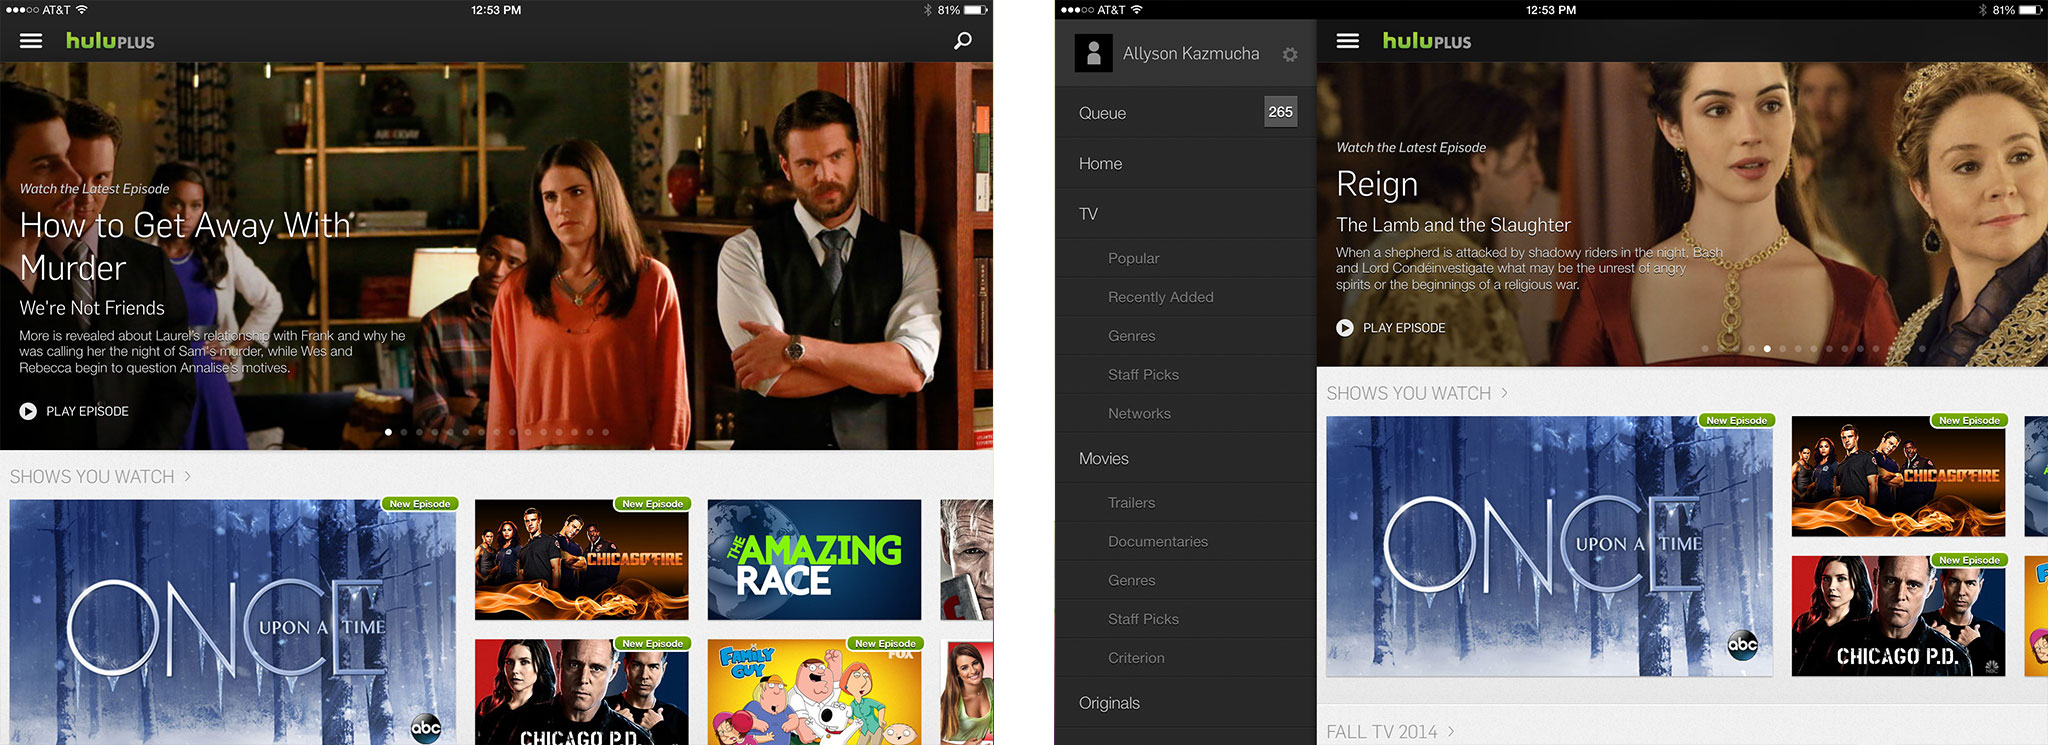 Best iPad apps for TV watchers: Hulu Plus